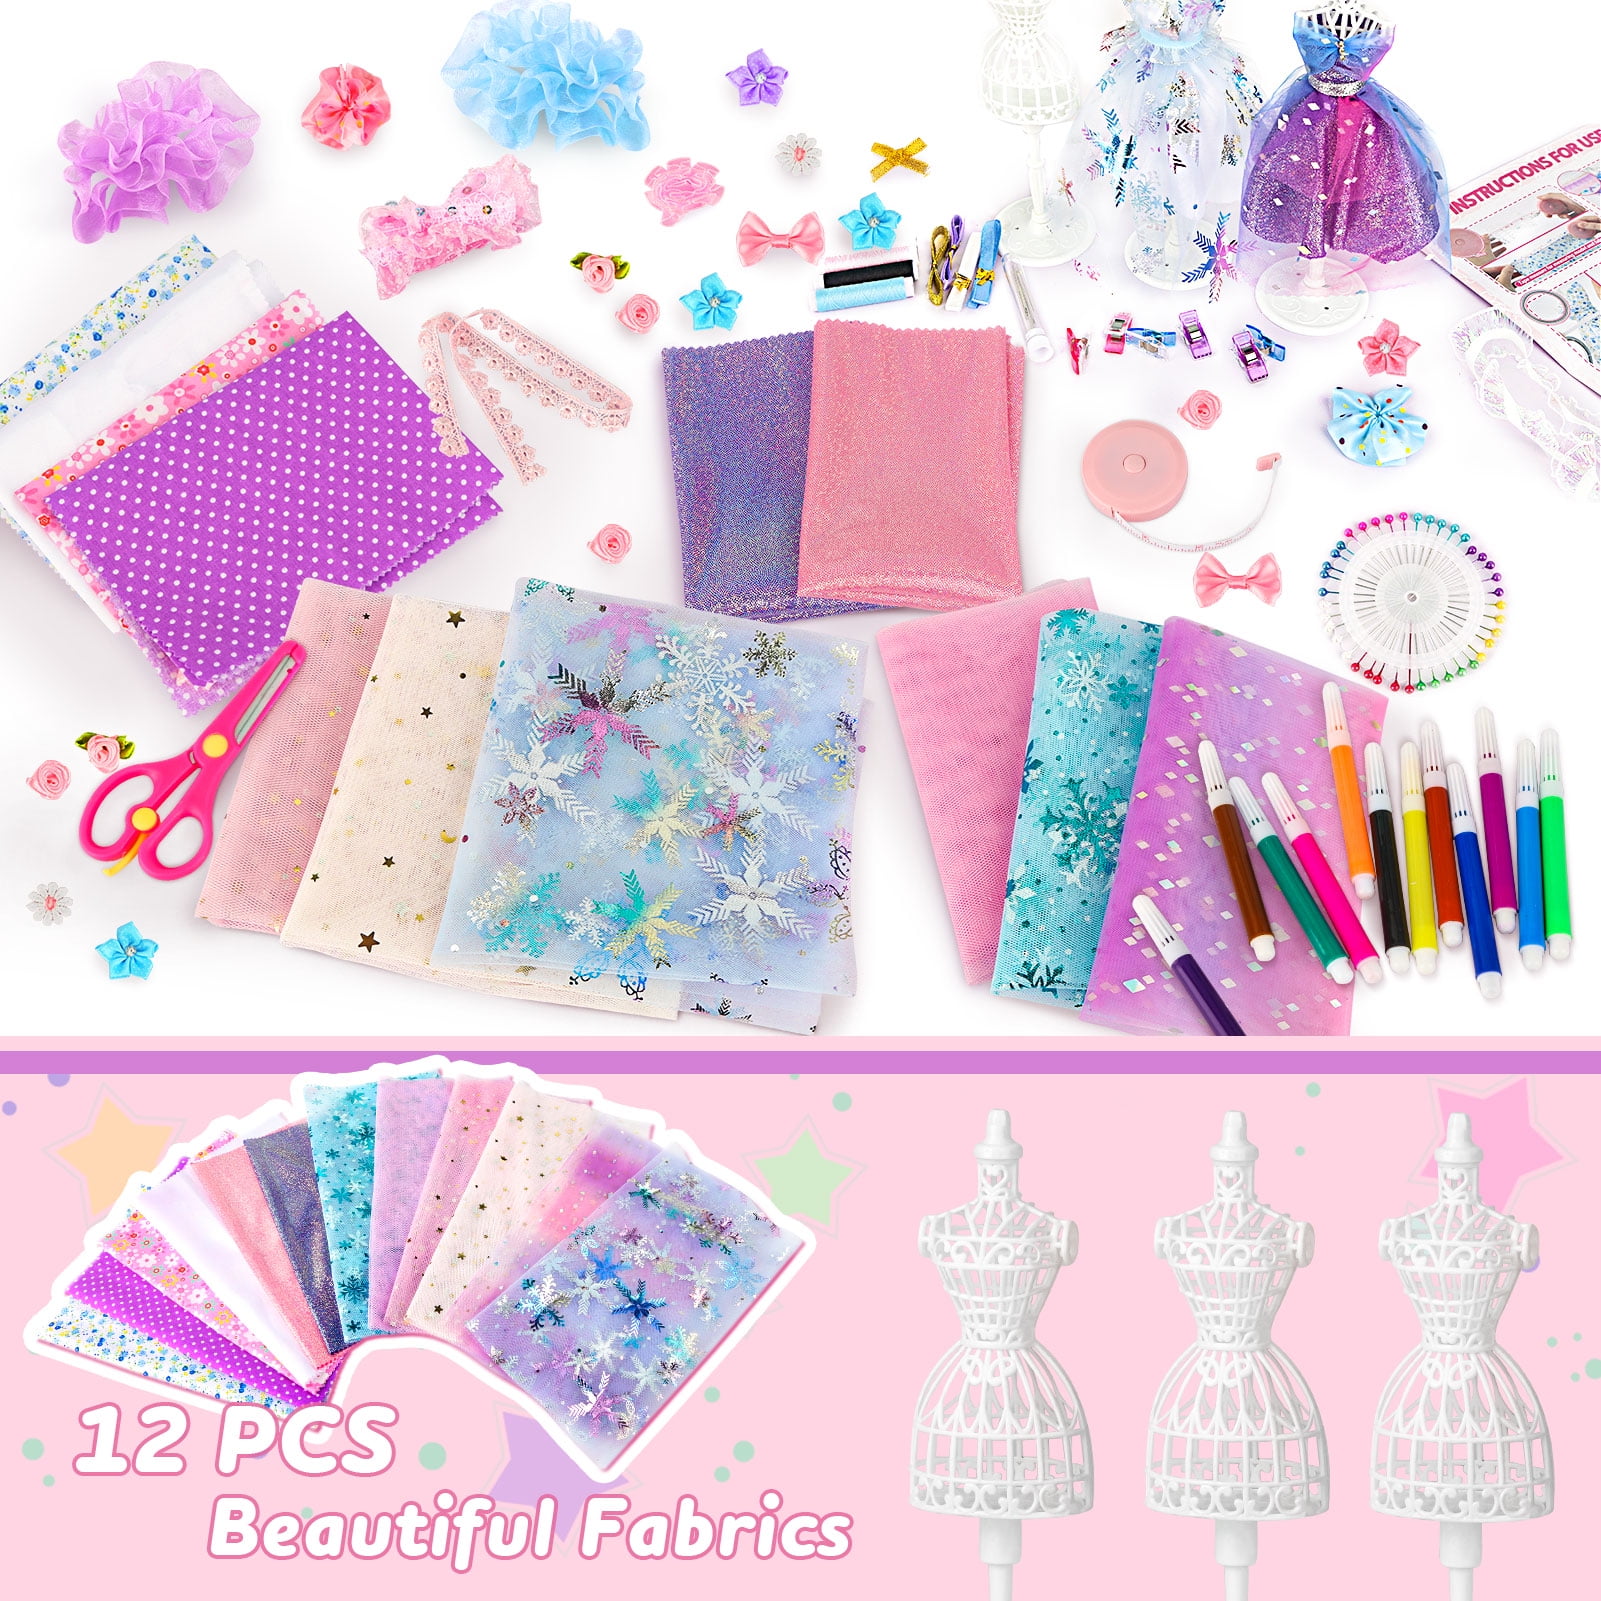 Design Studio – Sewing Kit for Kids – Girls Arts & Crafts Kits Age